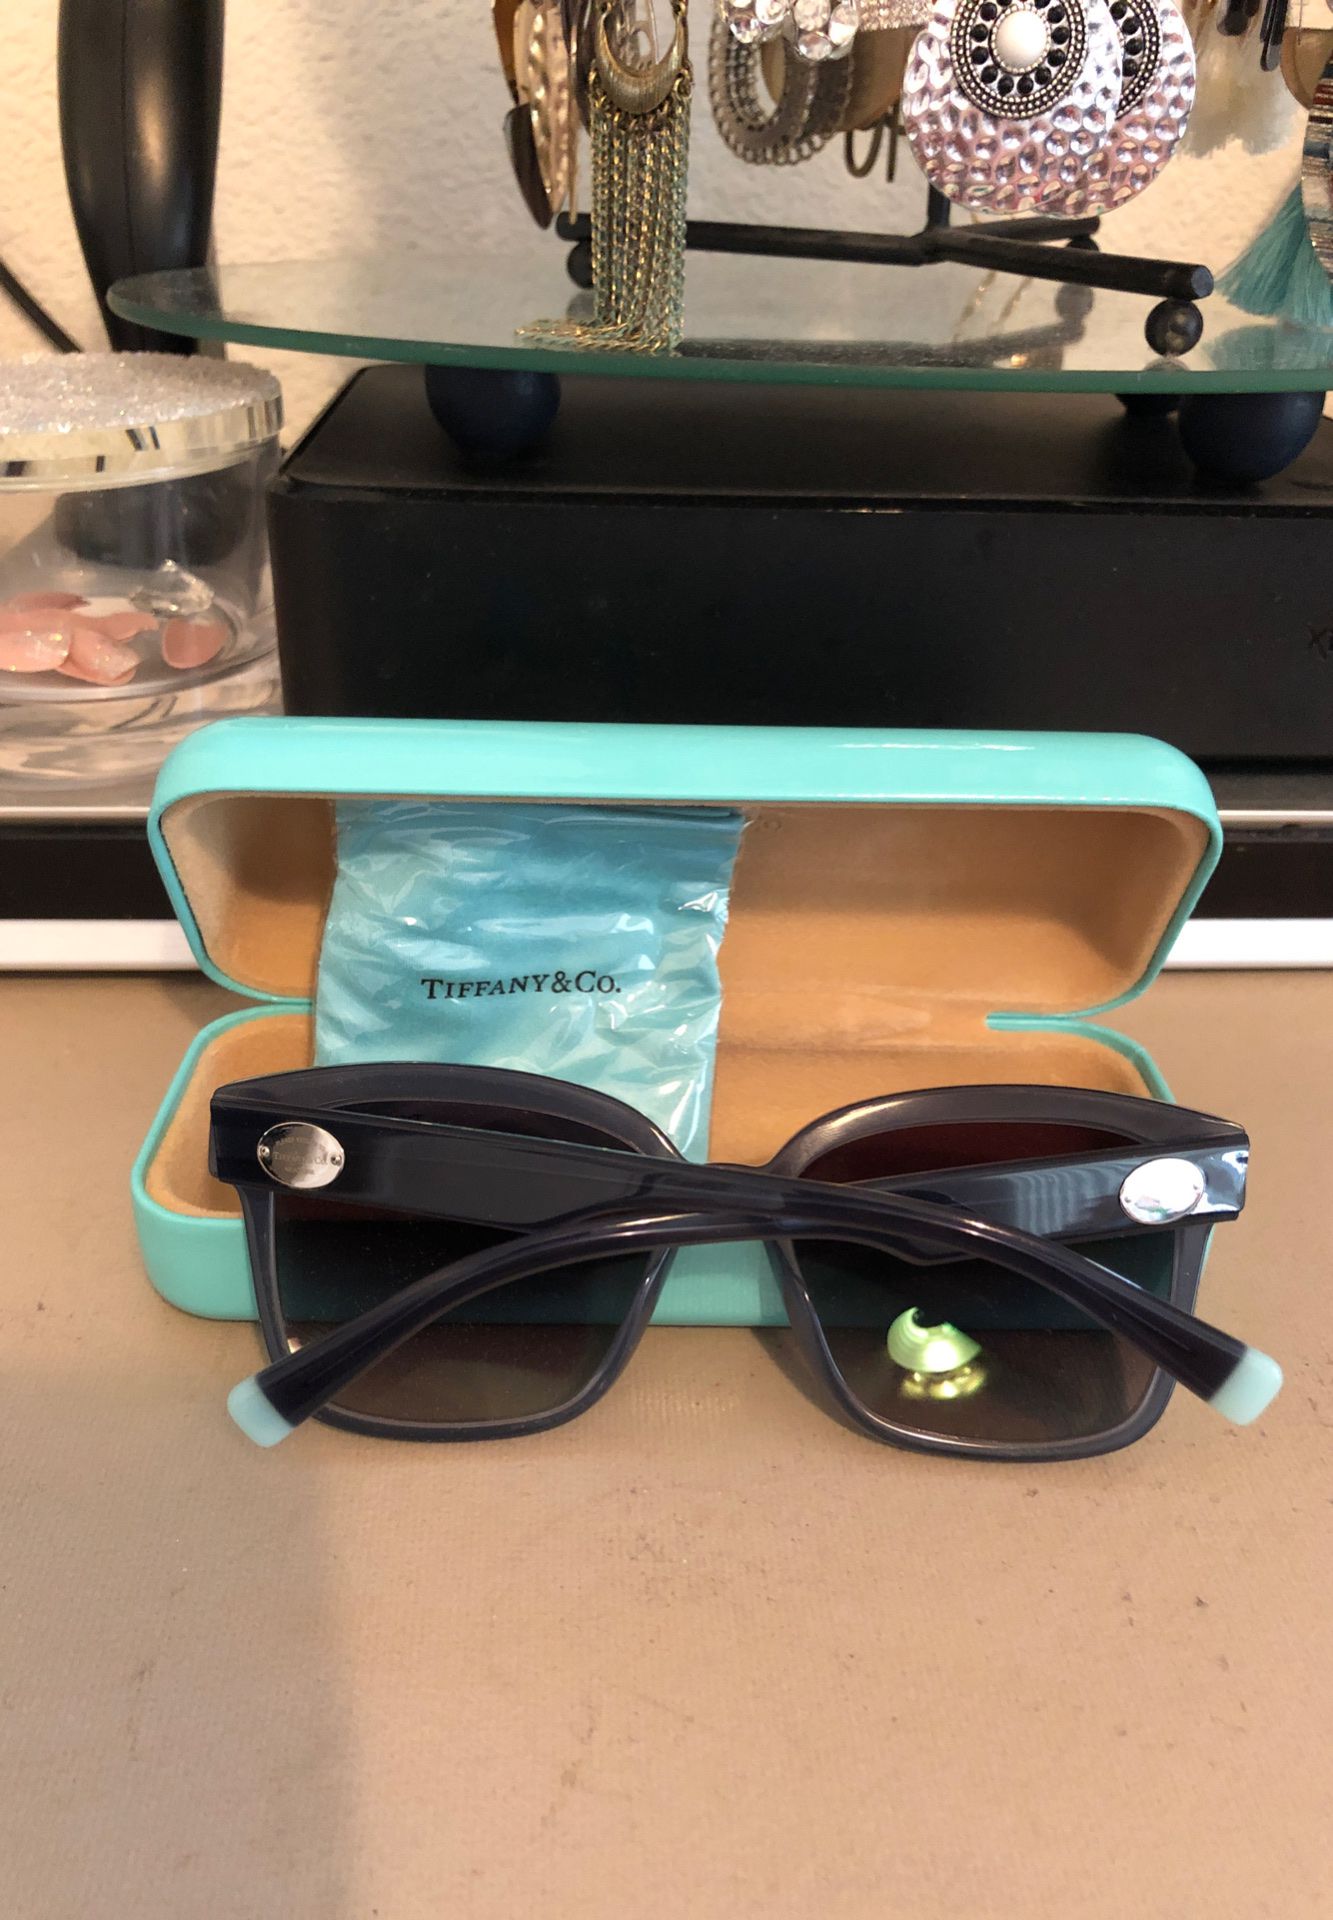 New Authentic Tiffany & Co. sunglasses